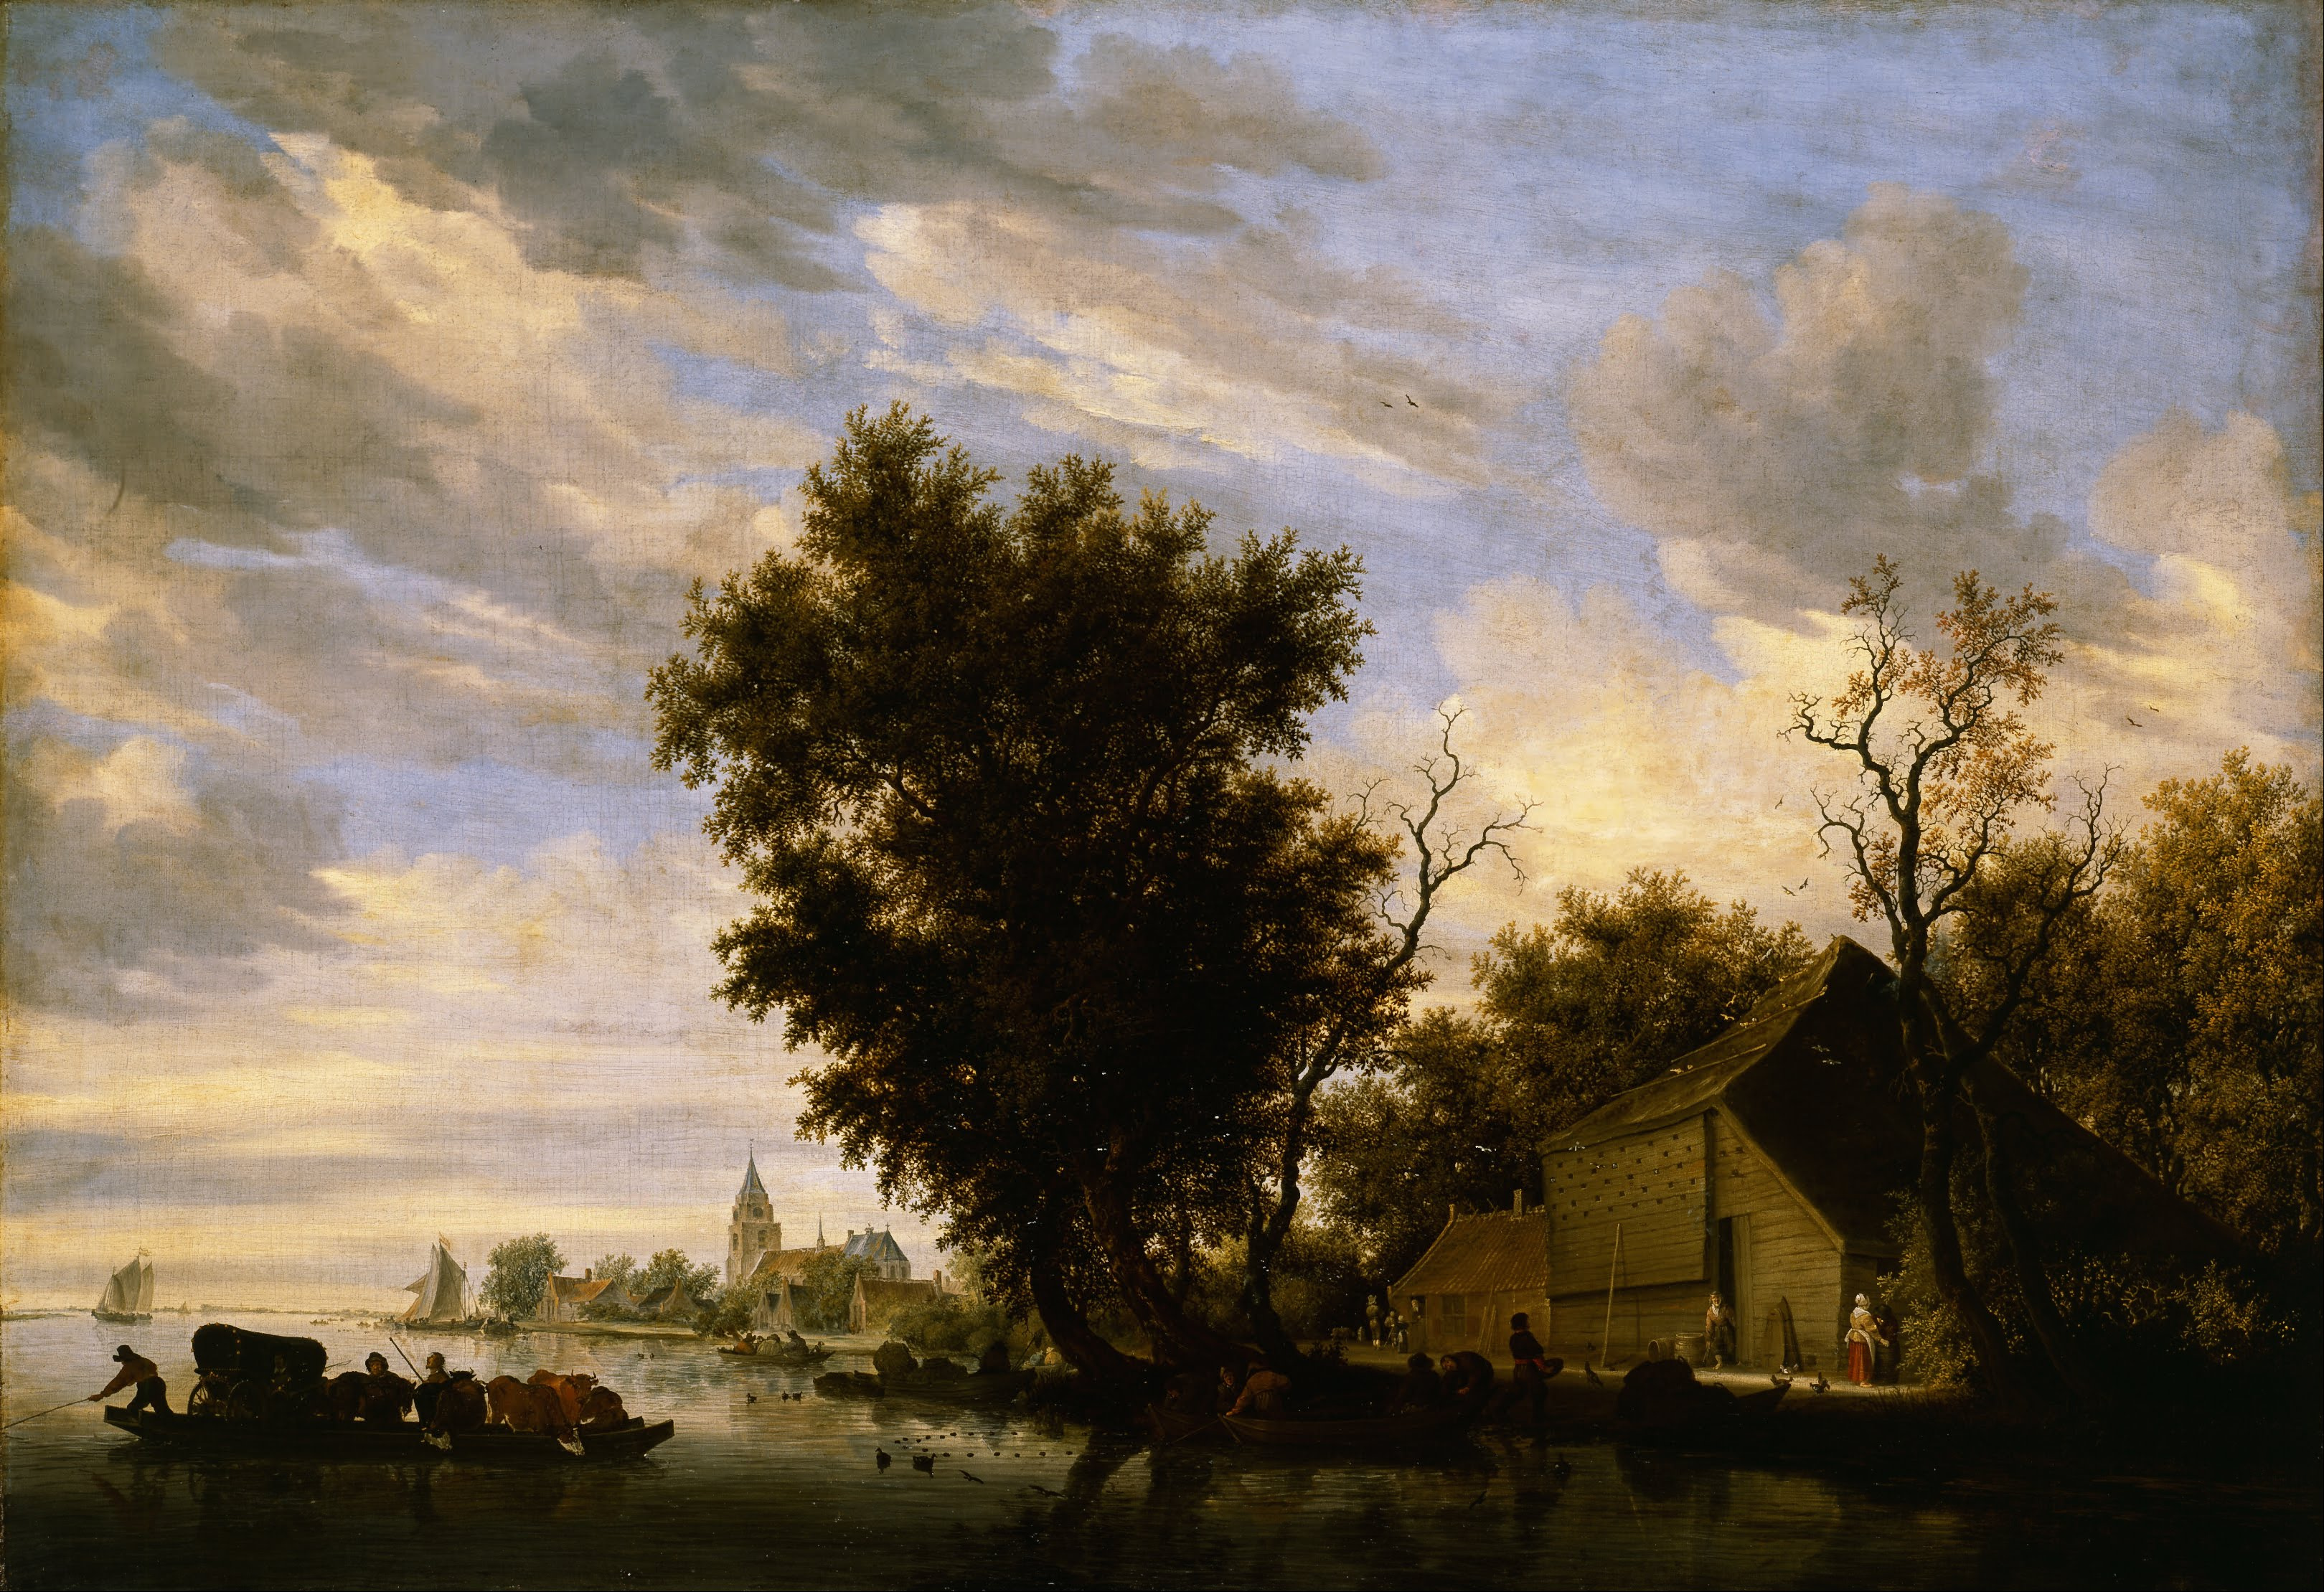 Salomon van Ruysdael - River scene with ferry boat - Google Art Project